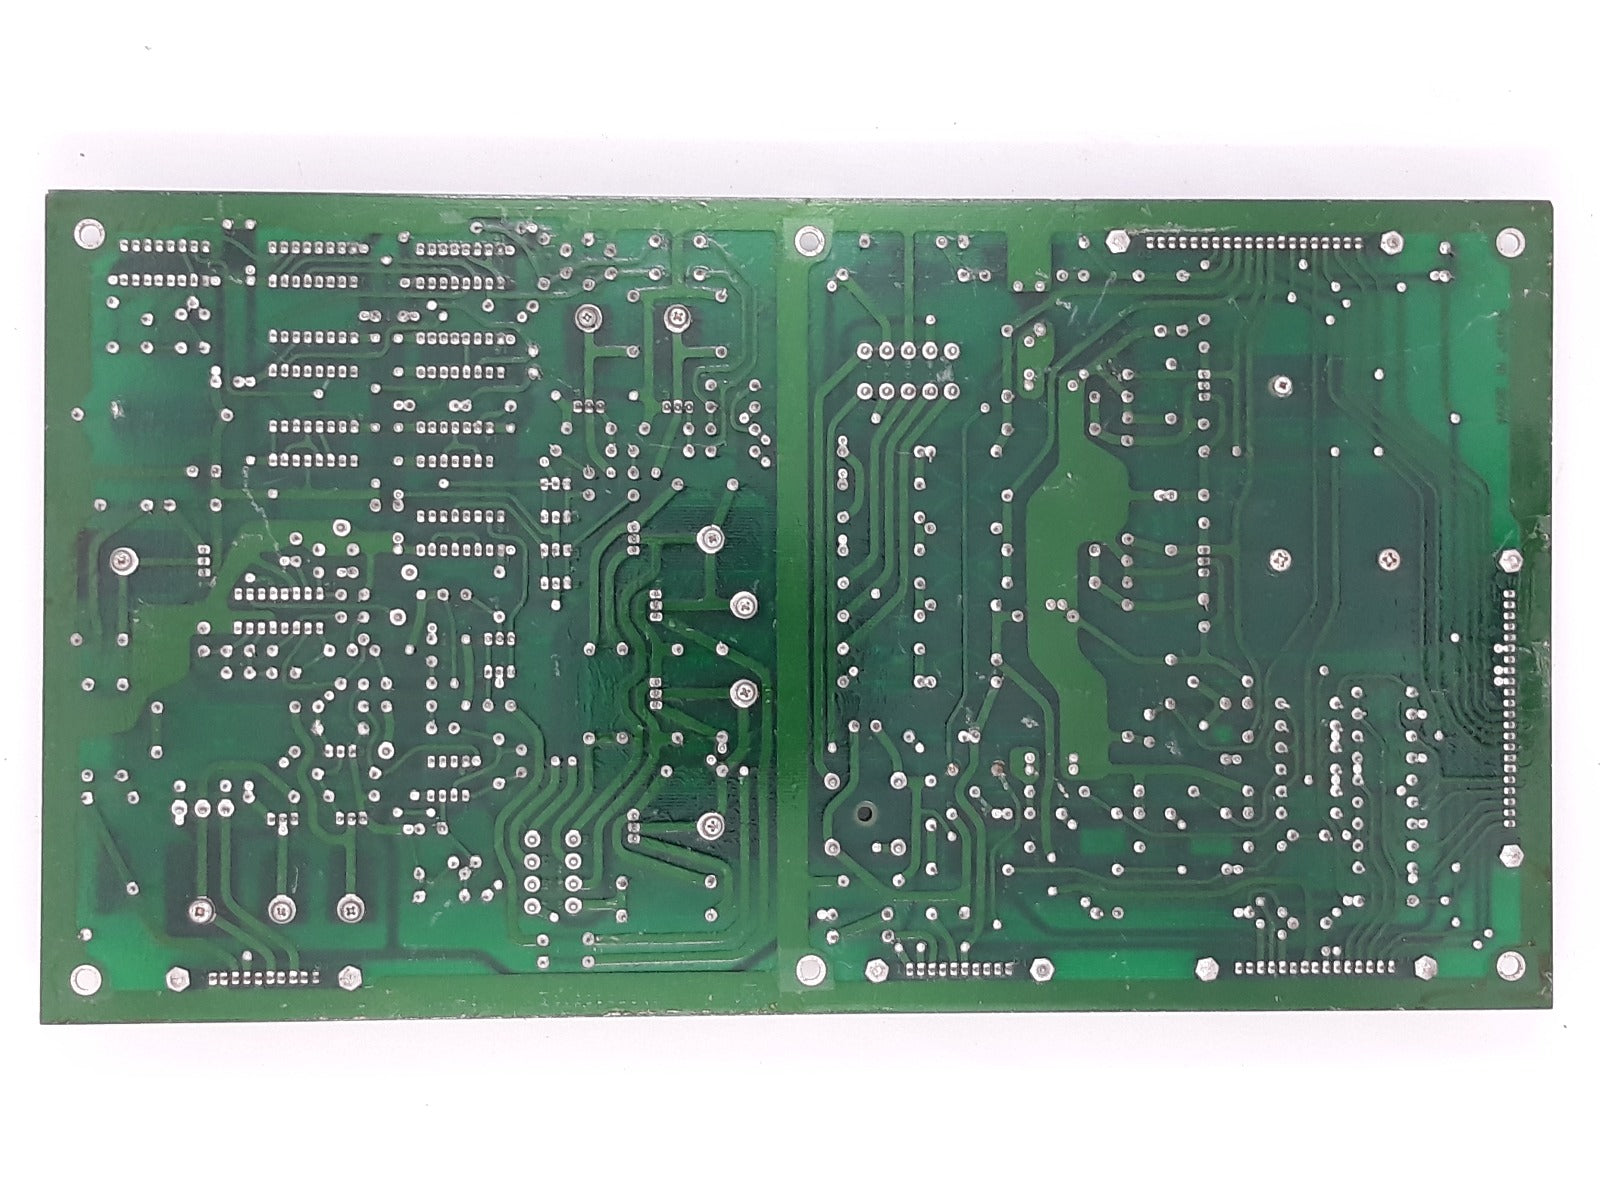 Jrc Cba 96 Pc210 Pcb Circuit Board H-6Pcrd00502B